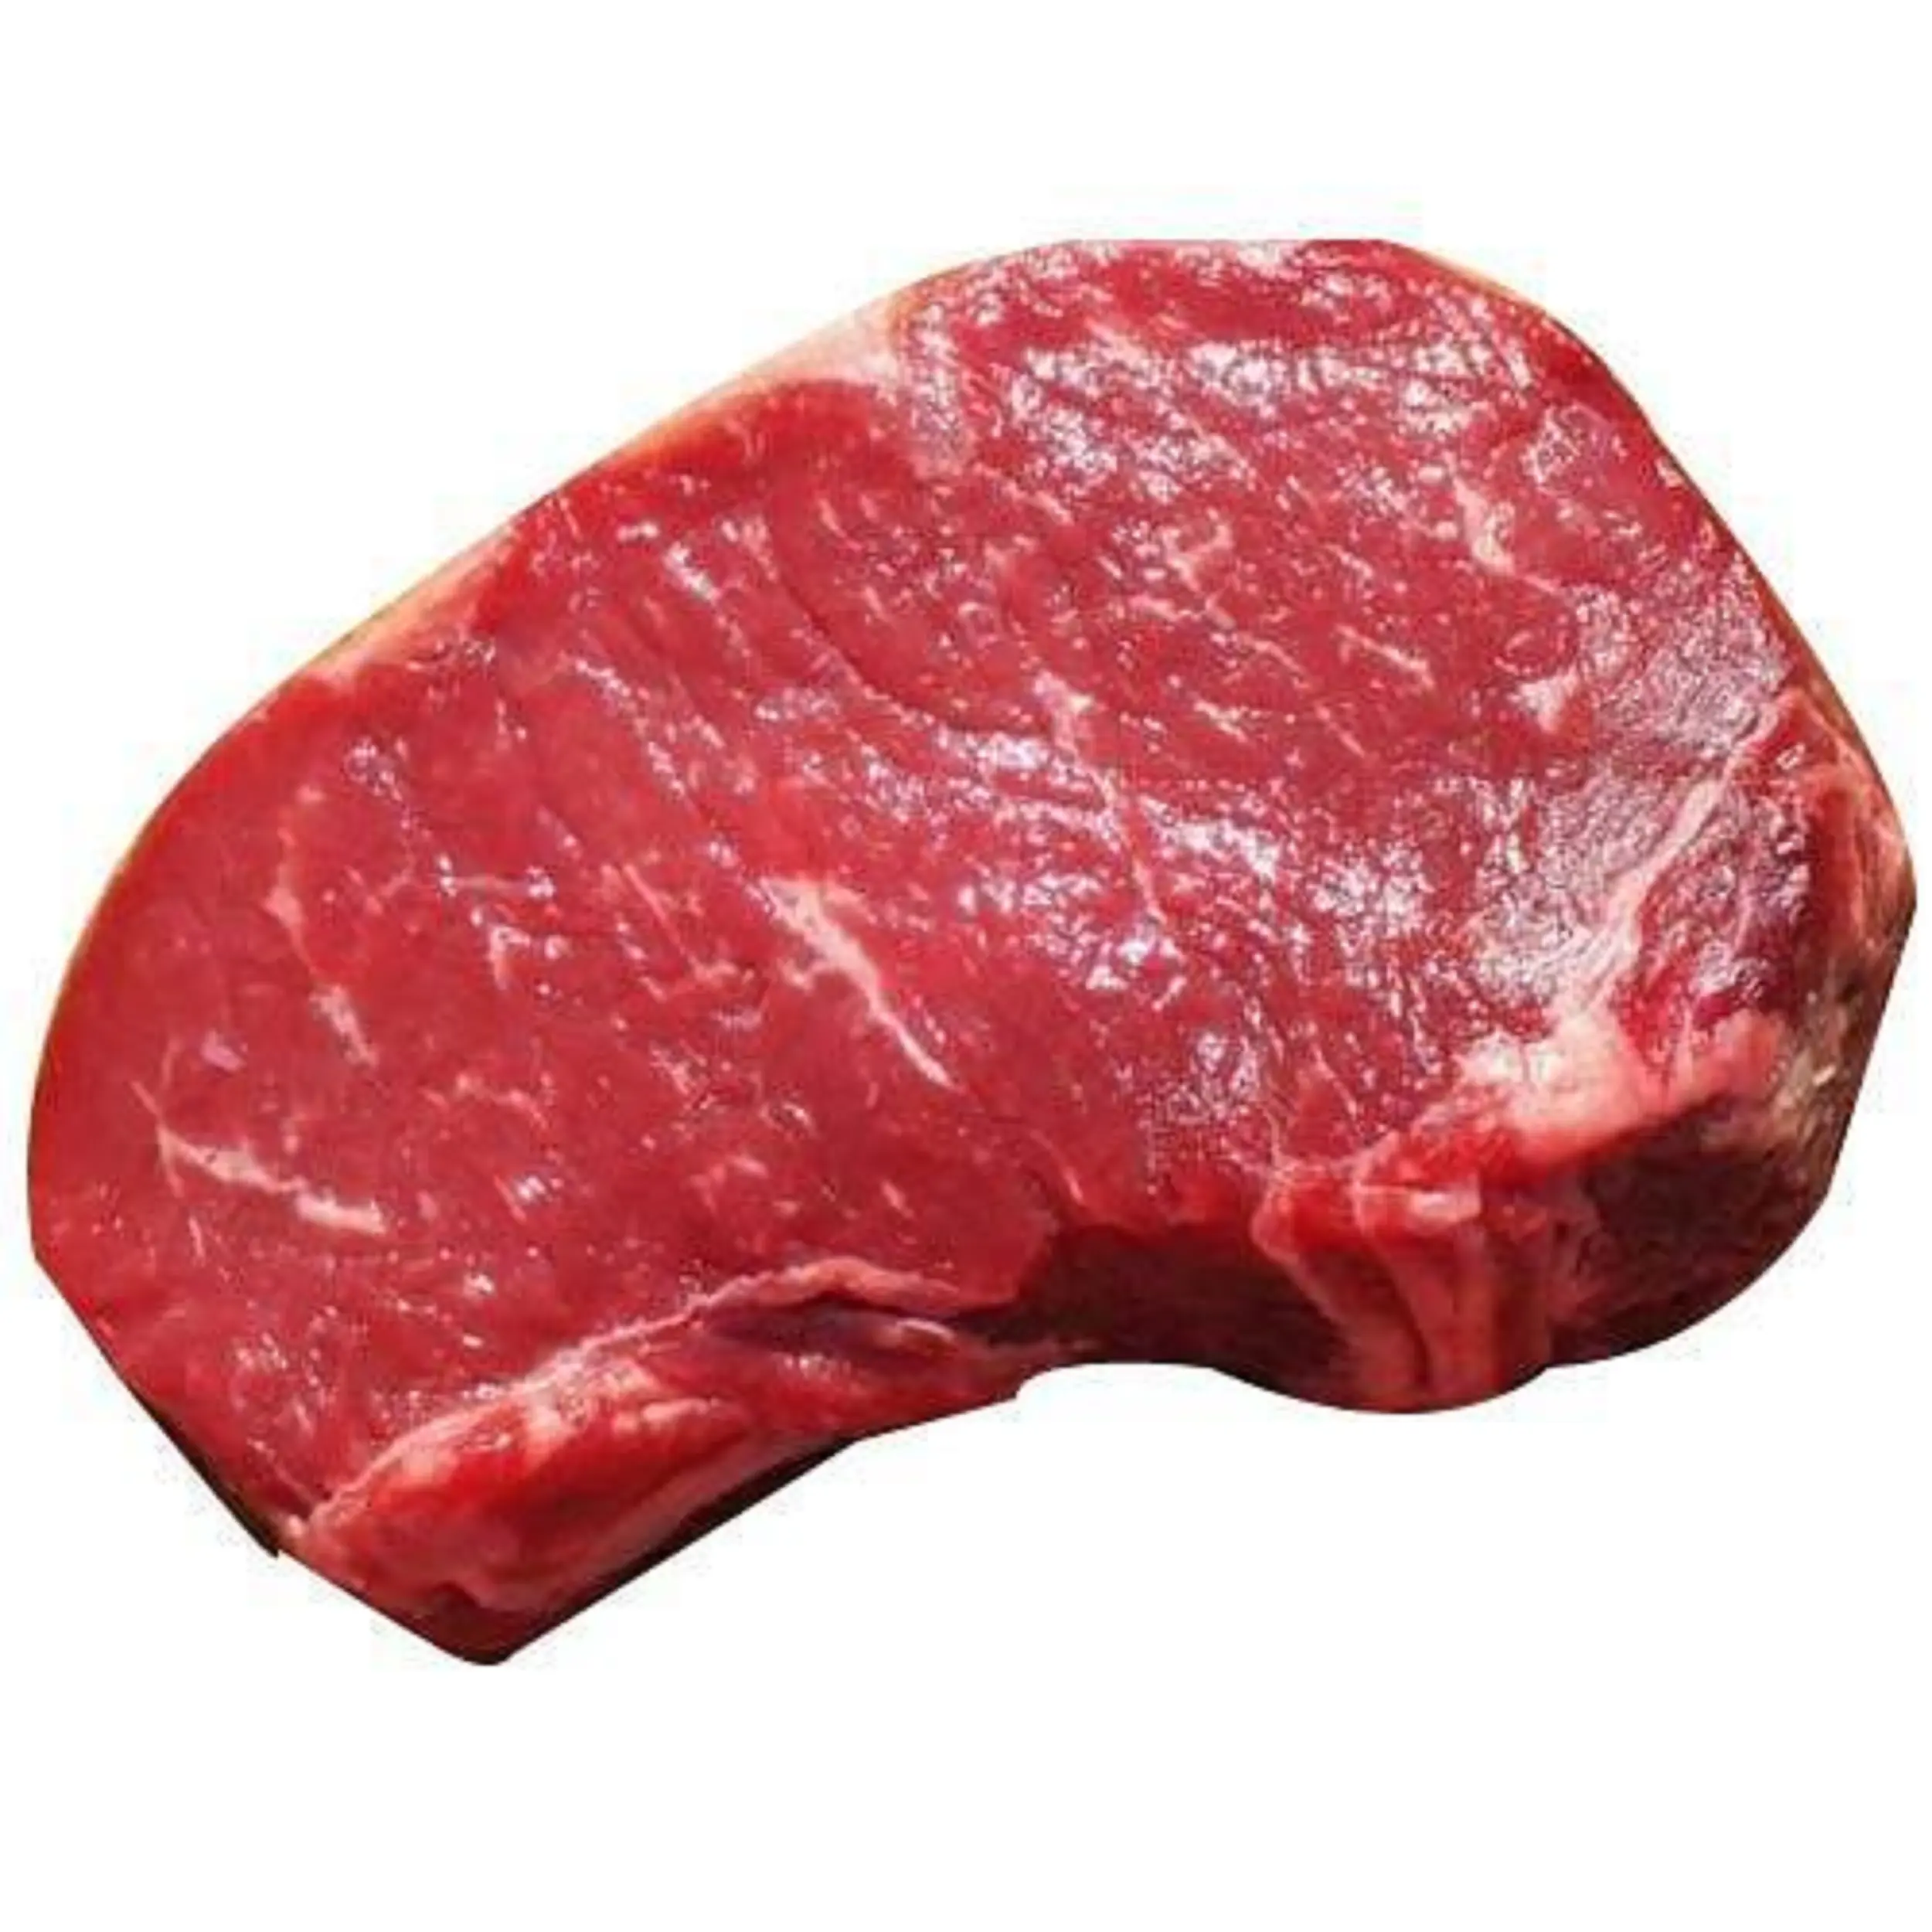 Ucuz fiyata lal sınıf Buffalo sığır taze dondurulmuş Buffalo et